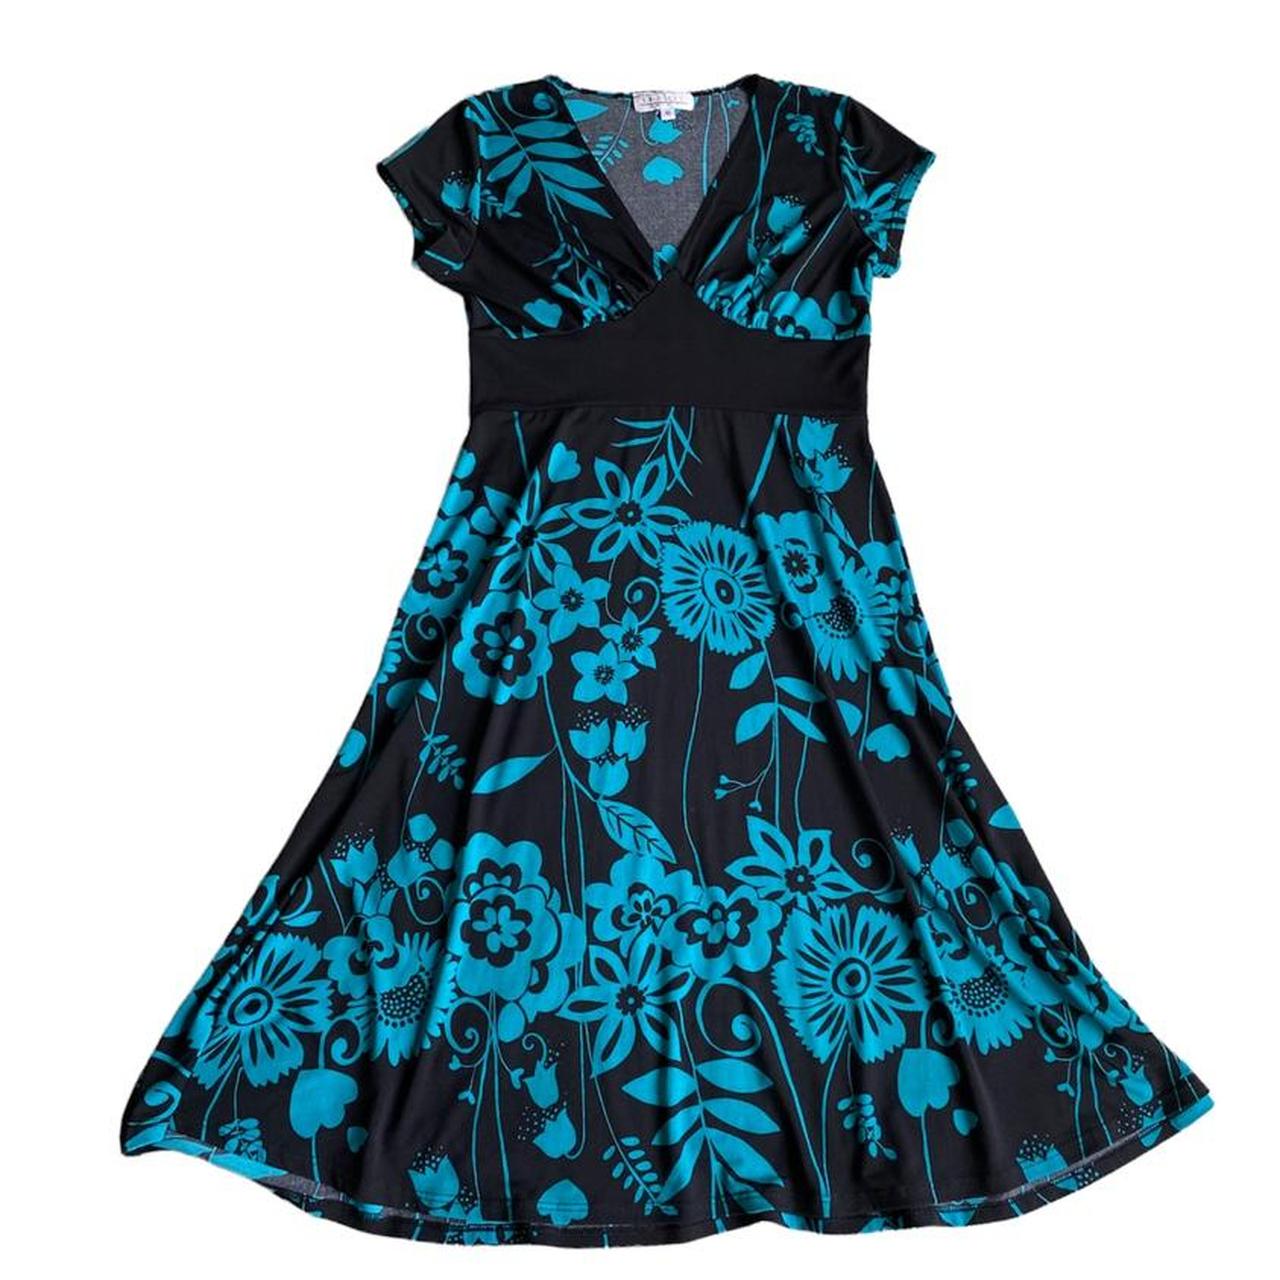 Enfocus Studio Women's Blue and Black Dress